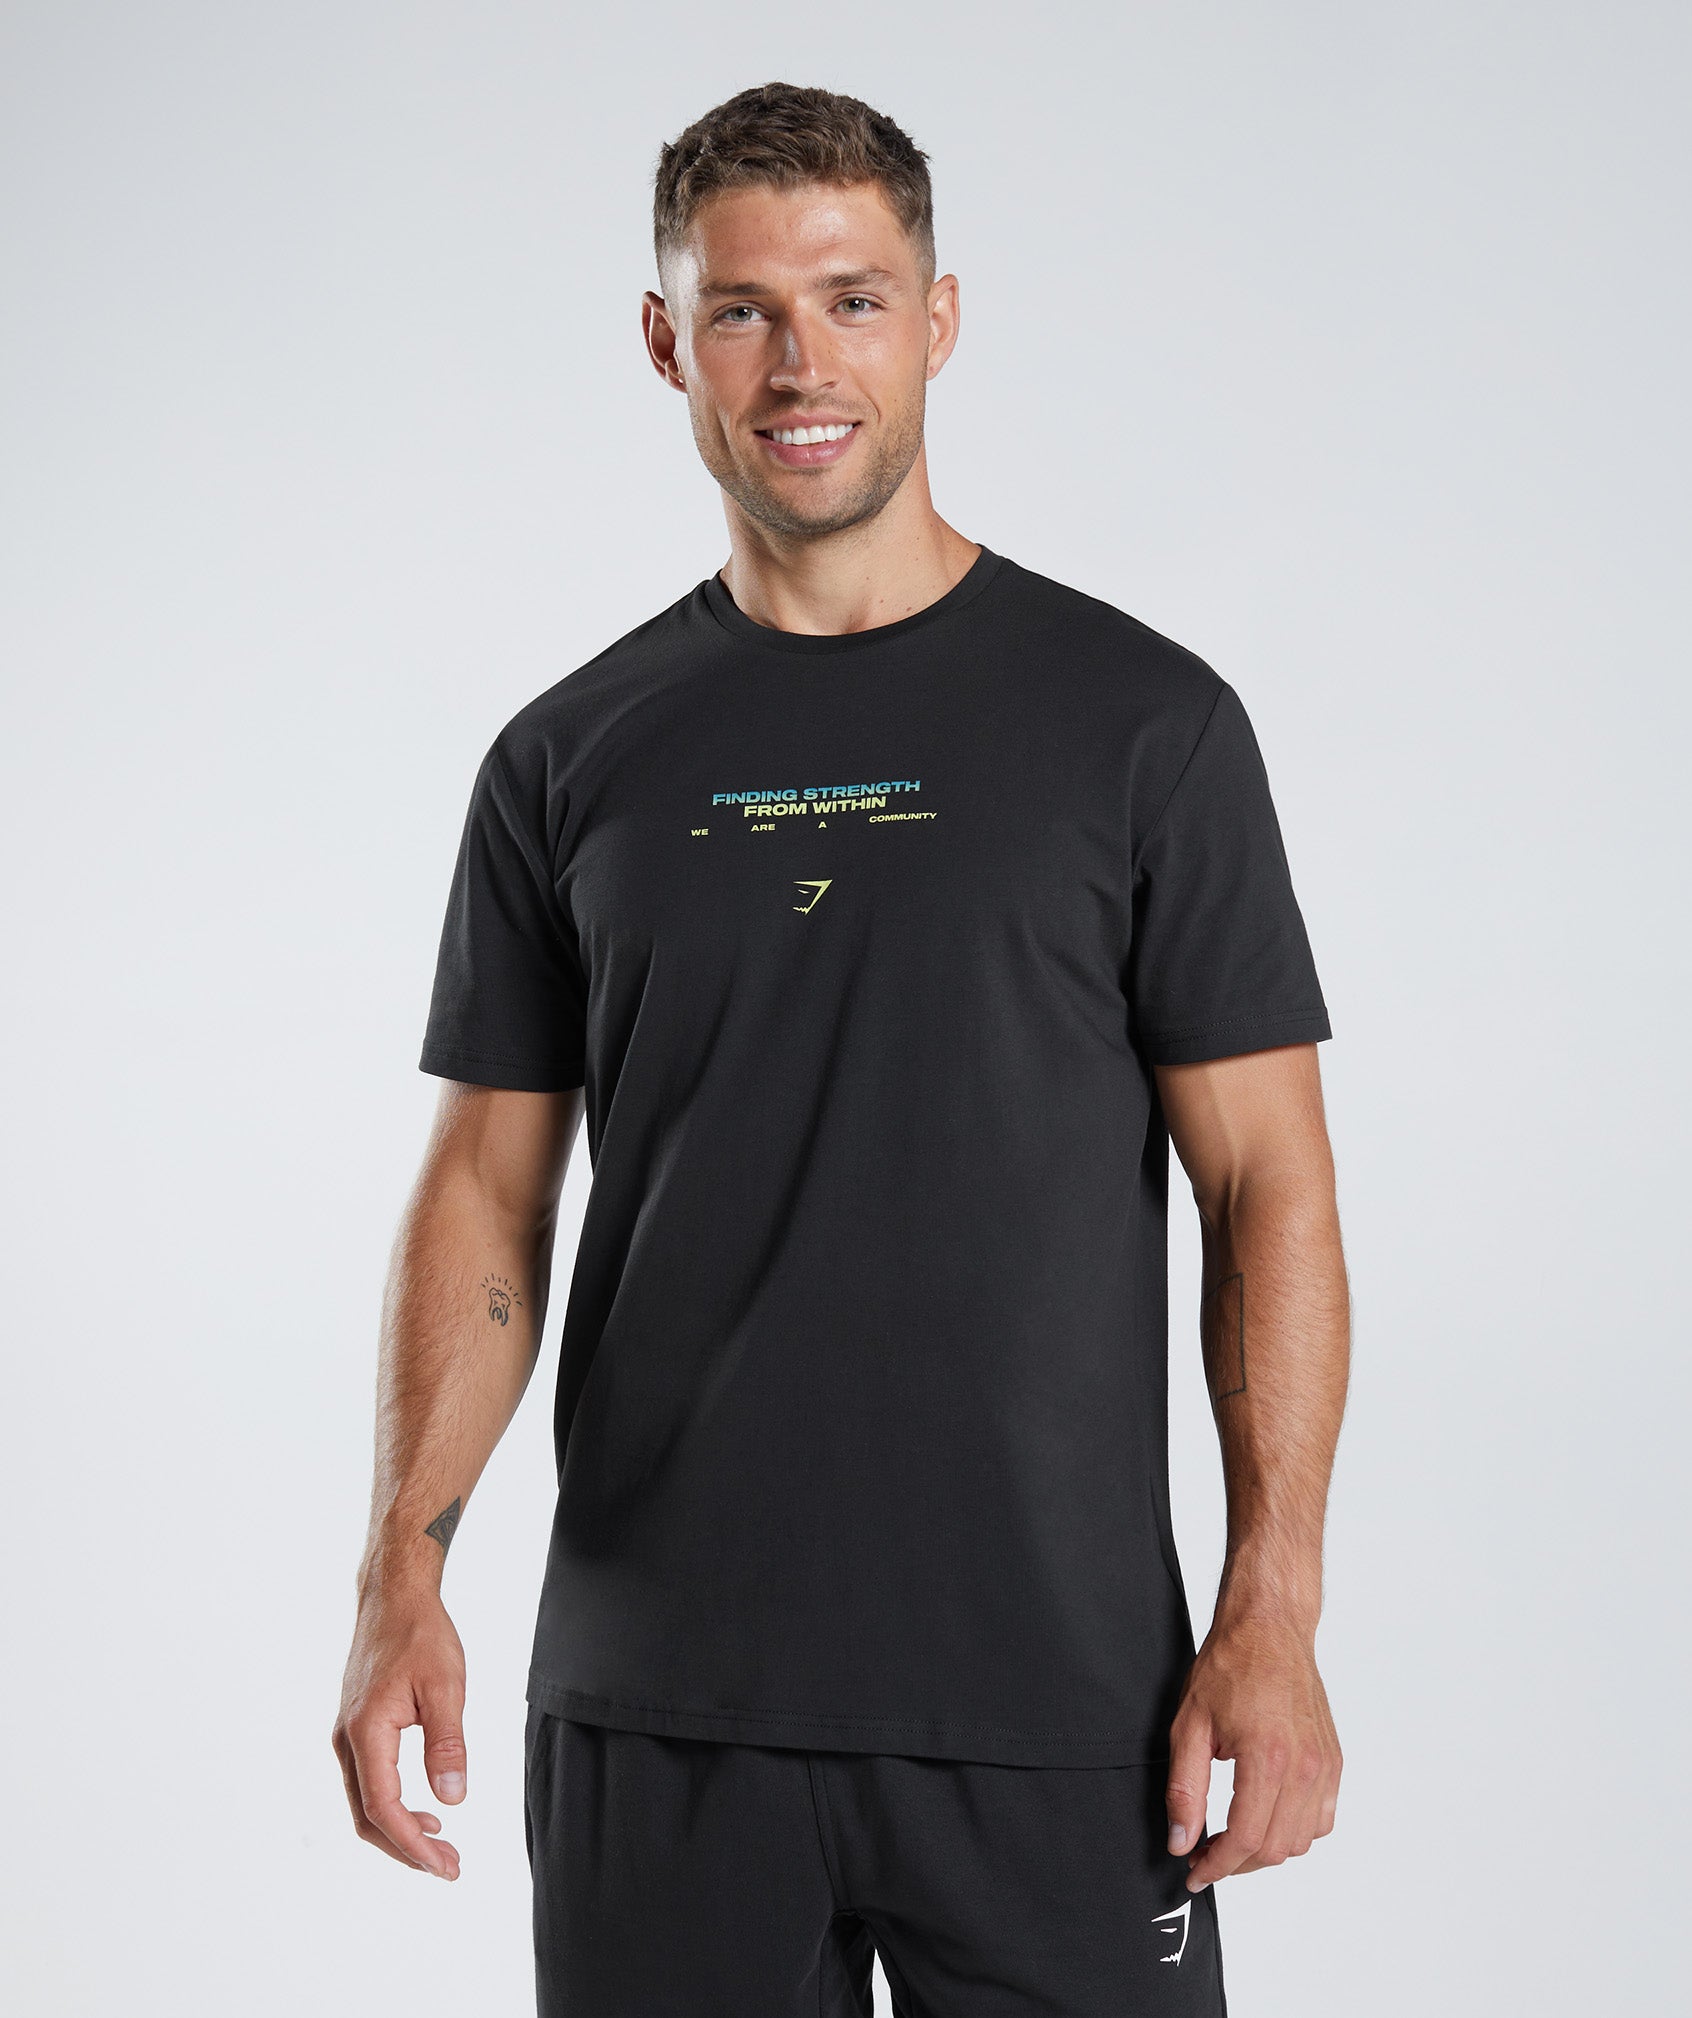 Hybrid Wellness T-Shirt in Black - view 1